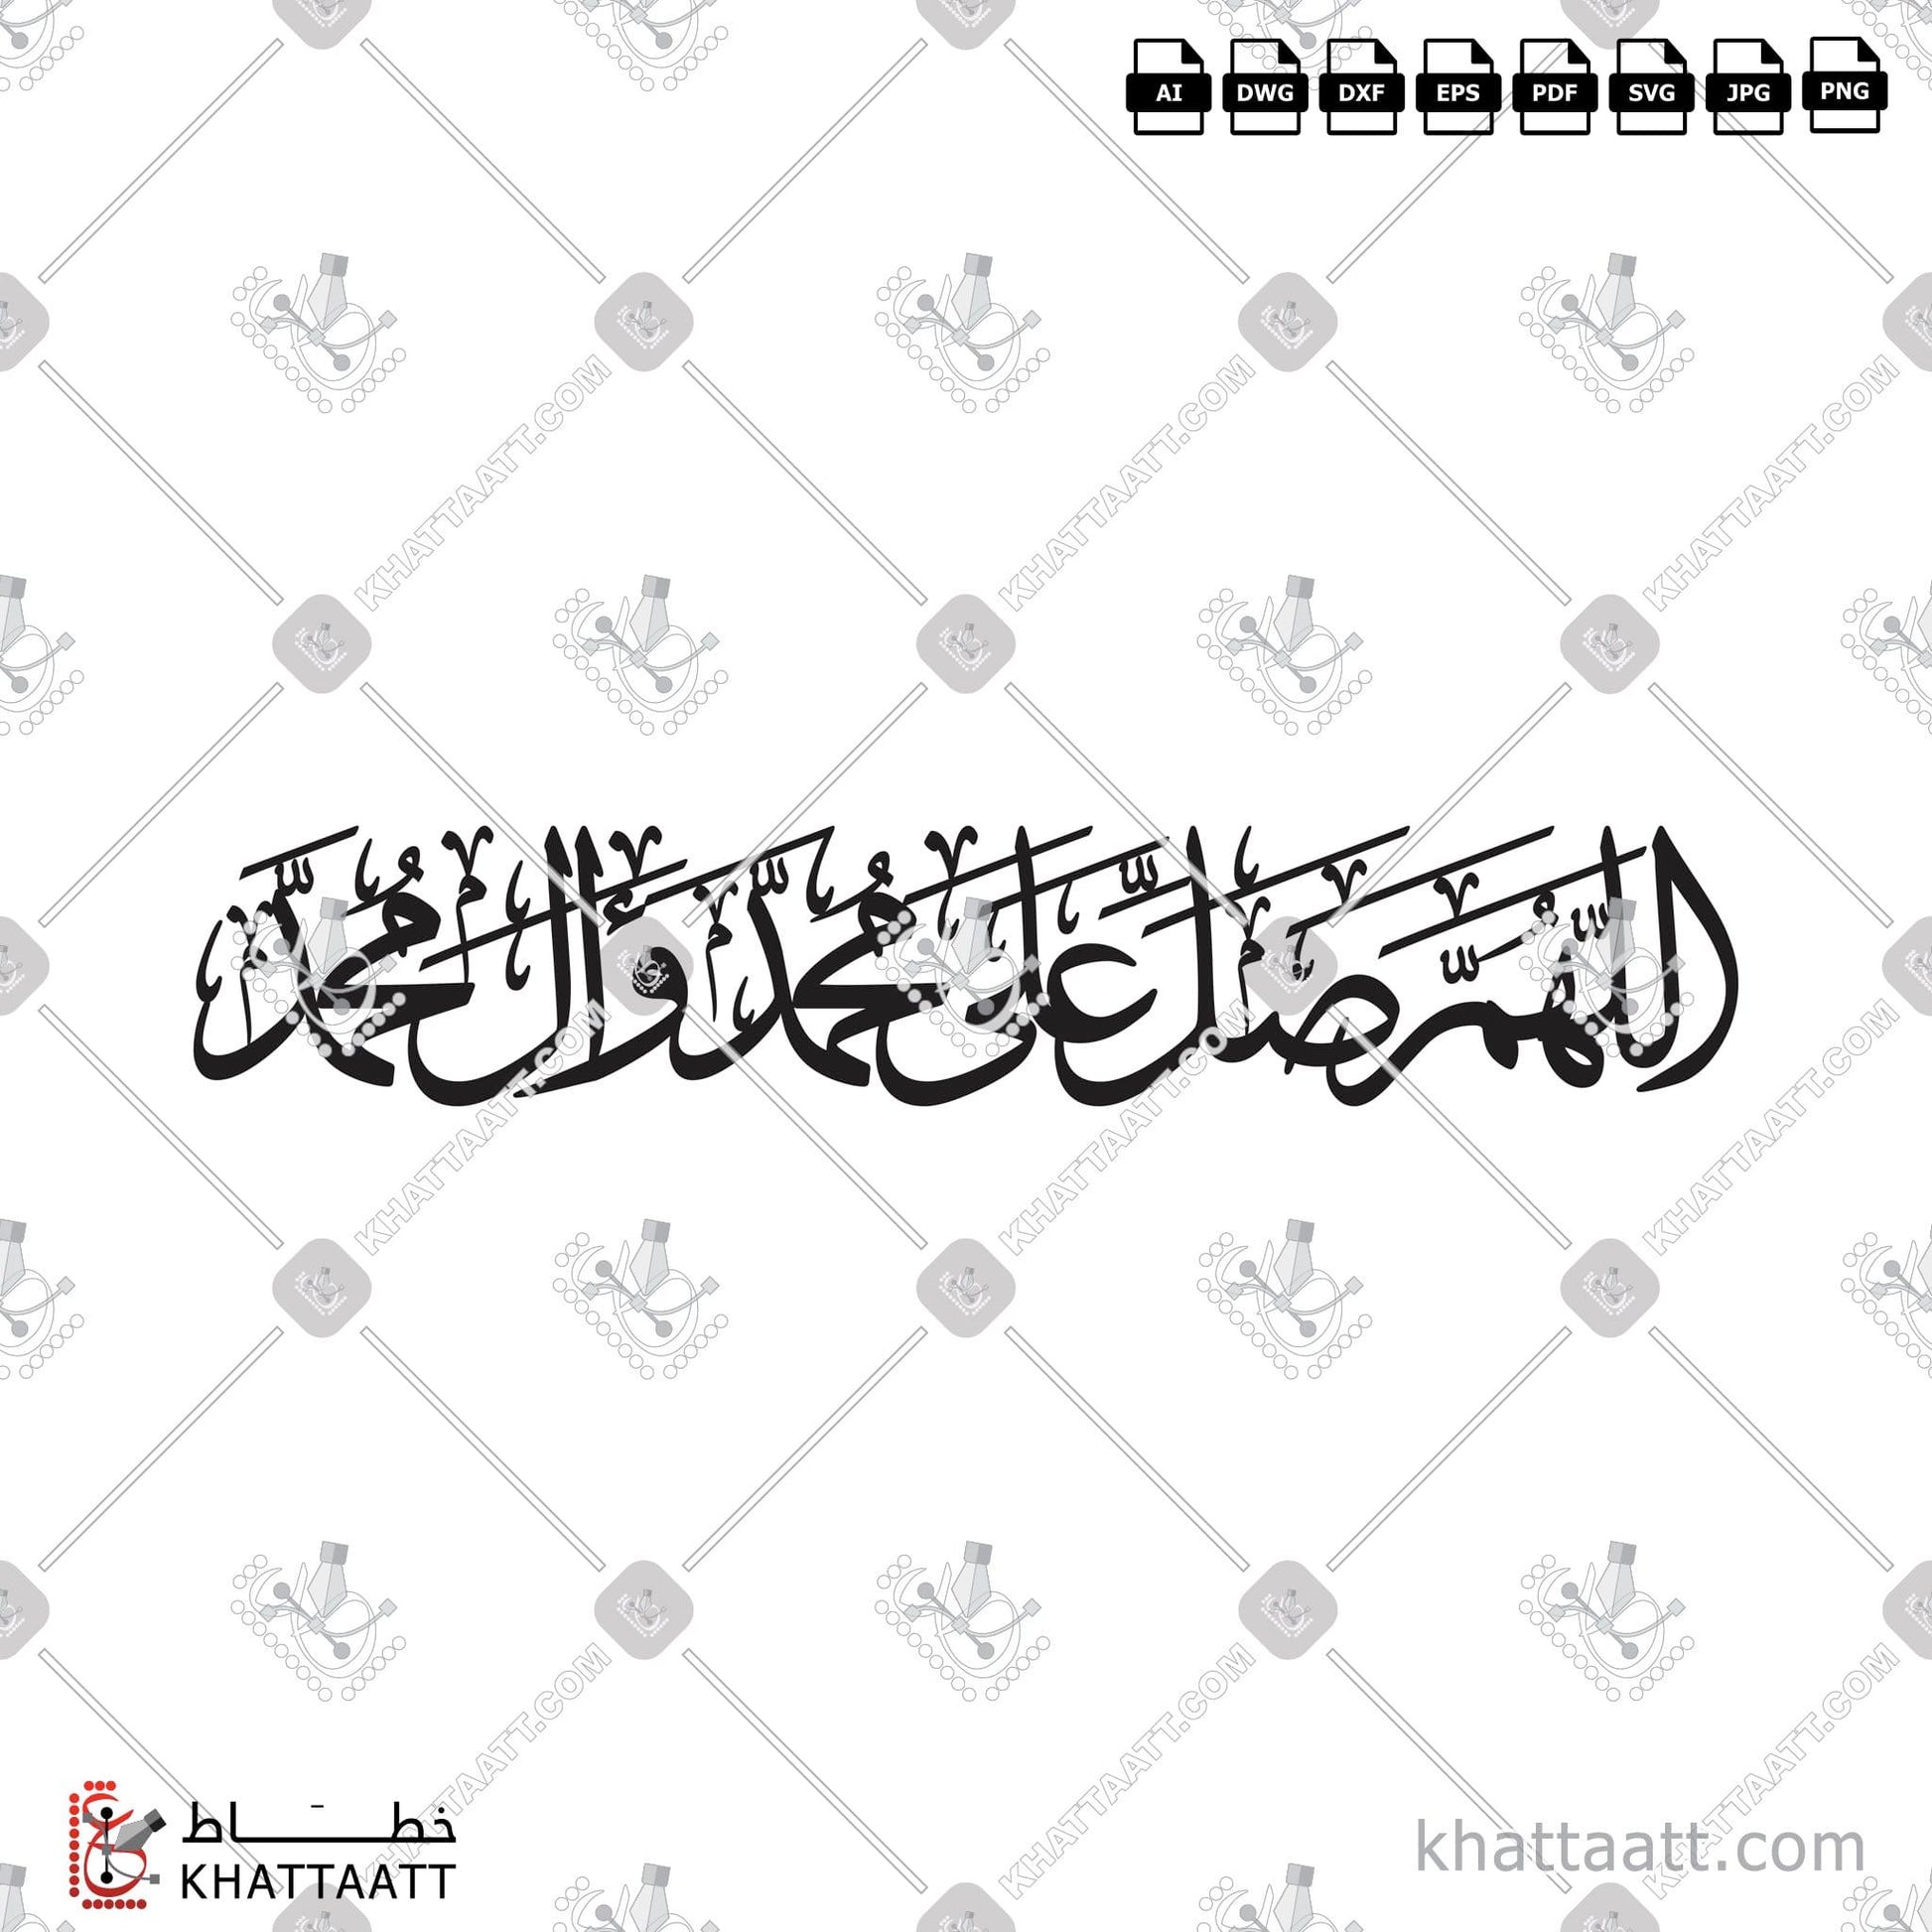 Download Arabic Calligraphy of اللهم صل على محمد وآل محمد in Thuluth - خط الثلث in vector and .png